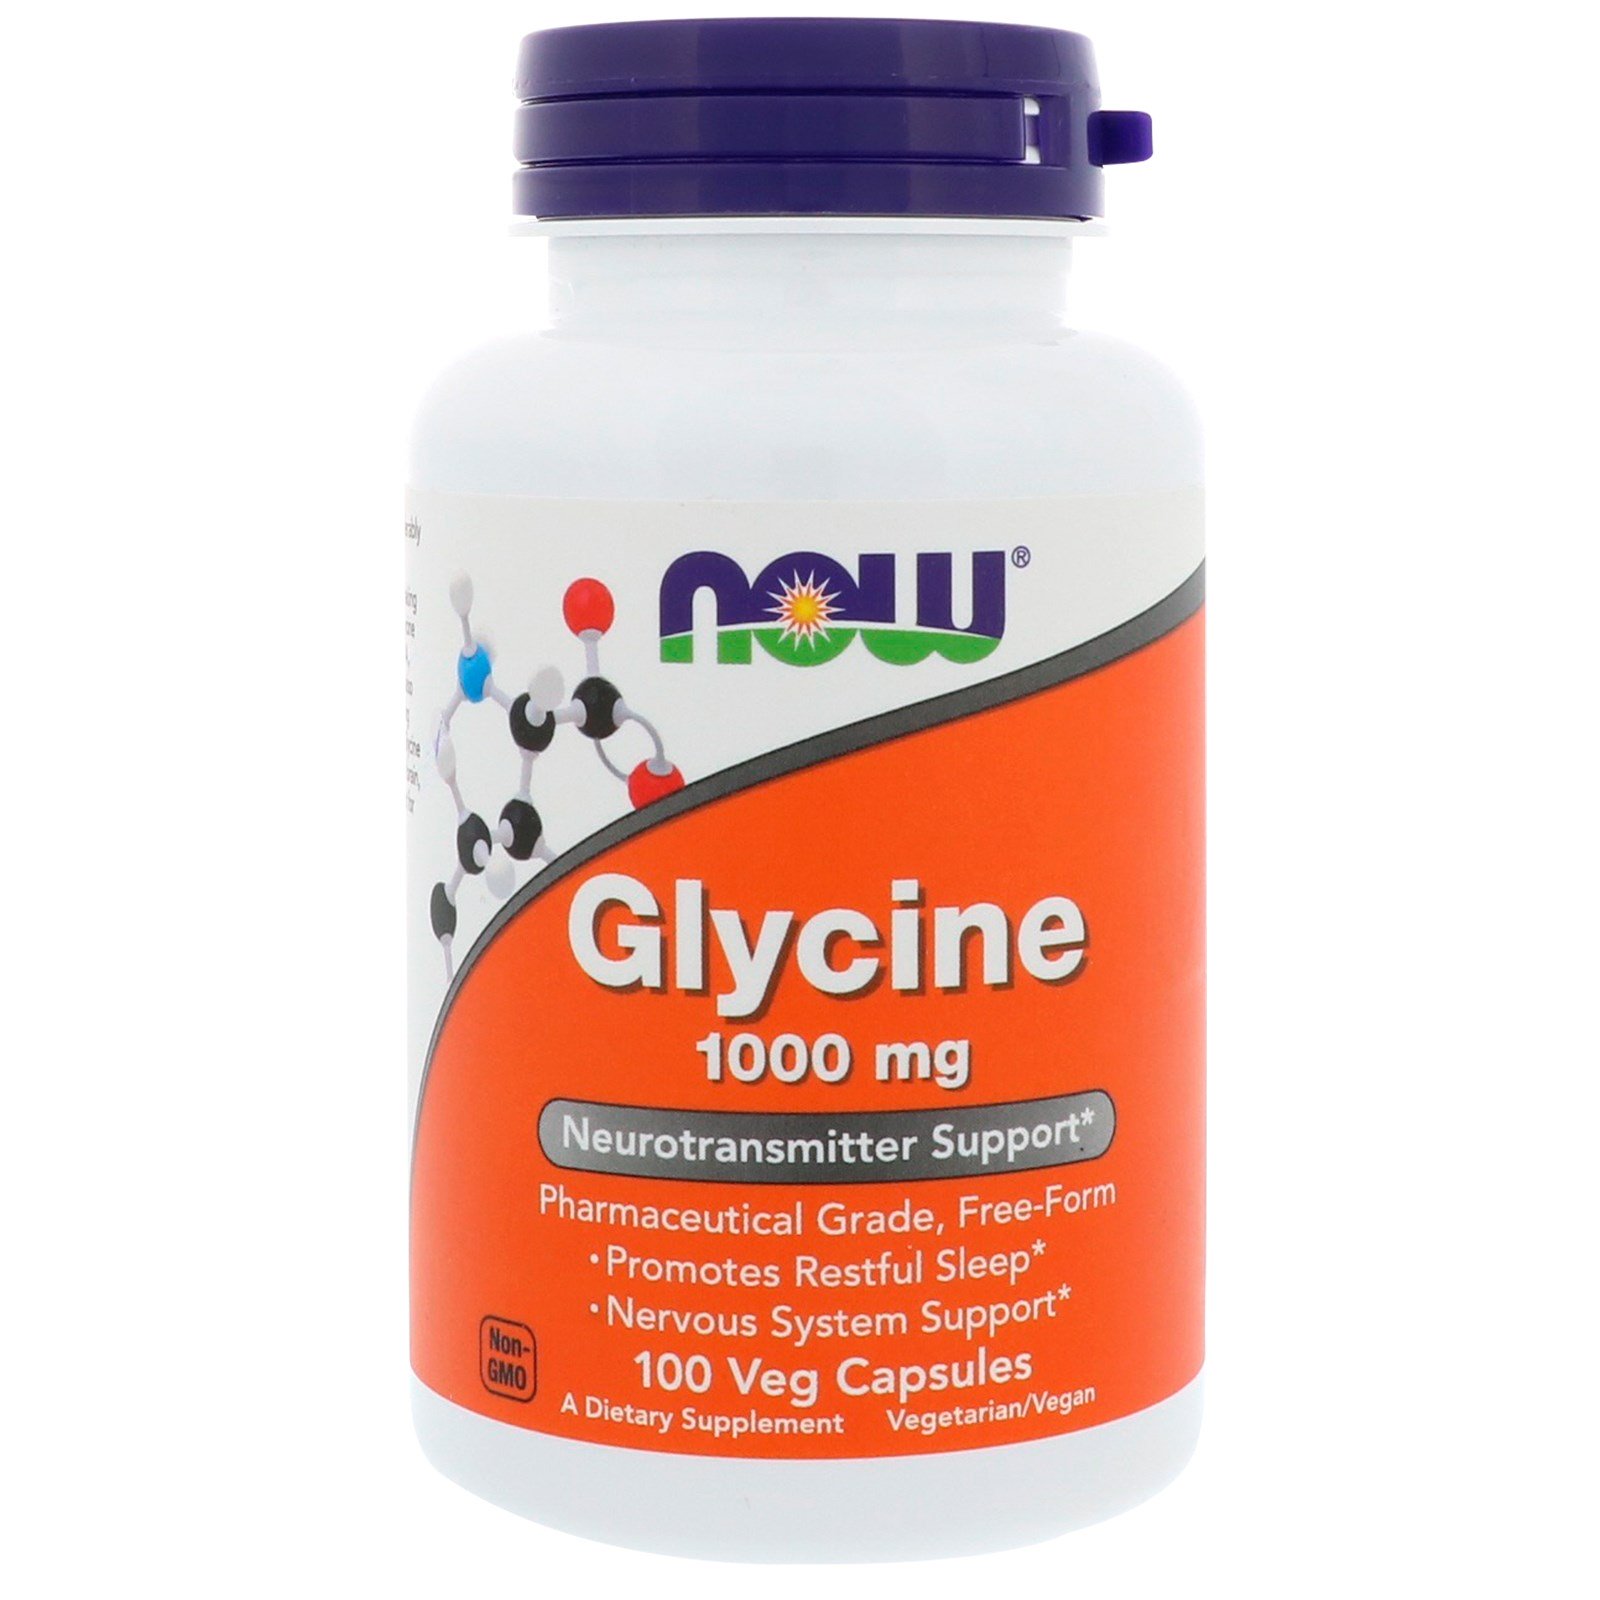 NOW Glycine, Глицин 1000 мг - 100 капсул